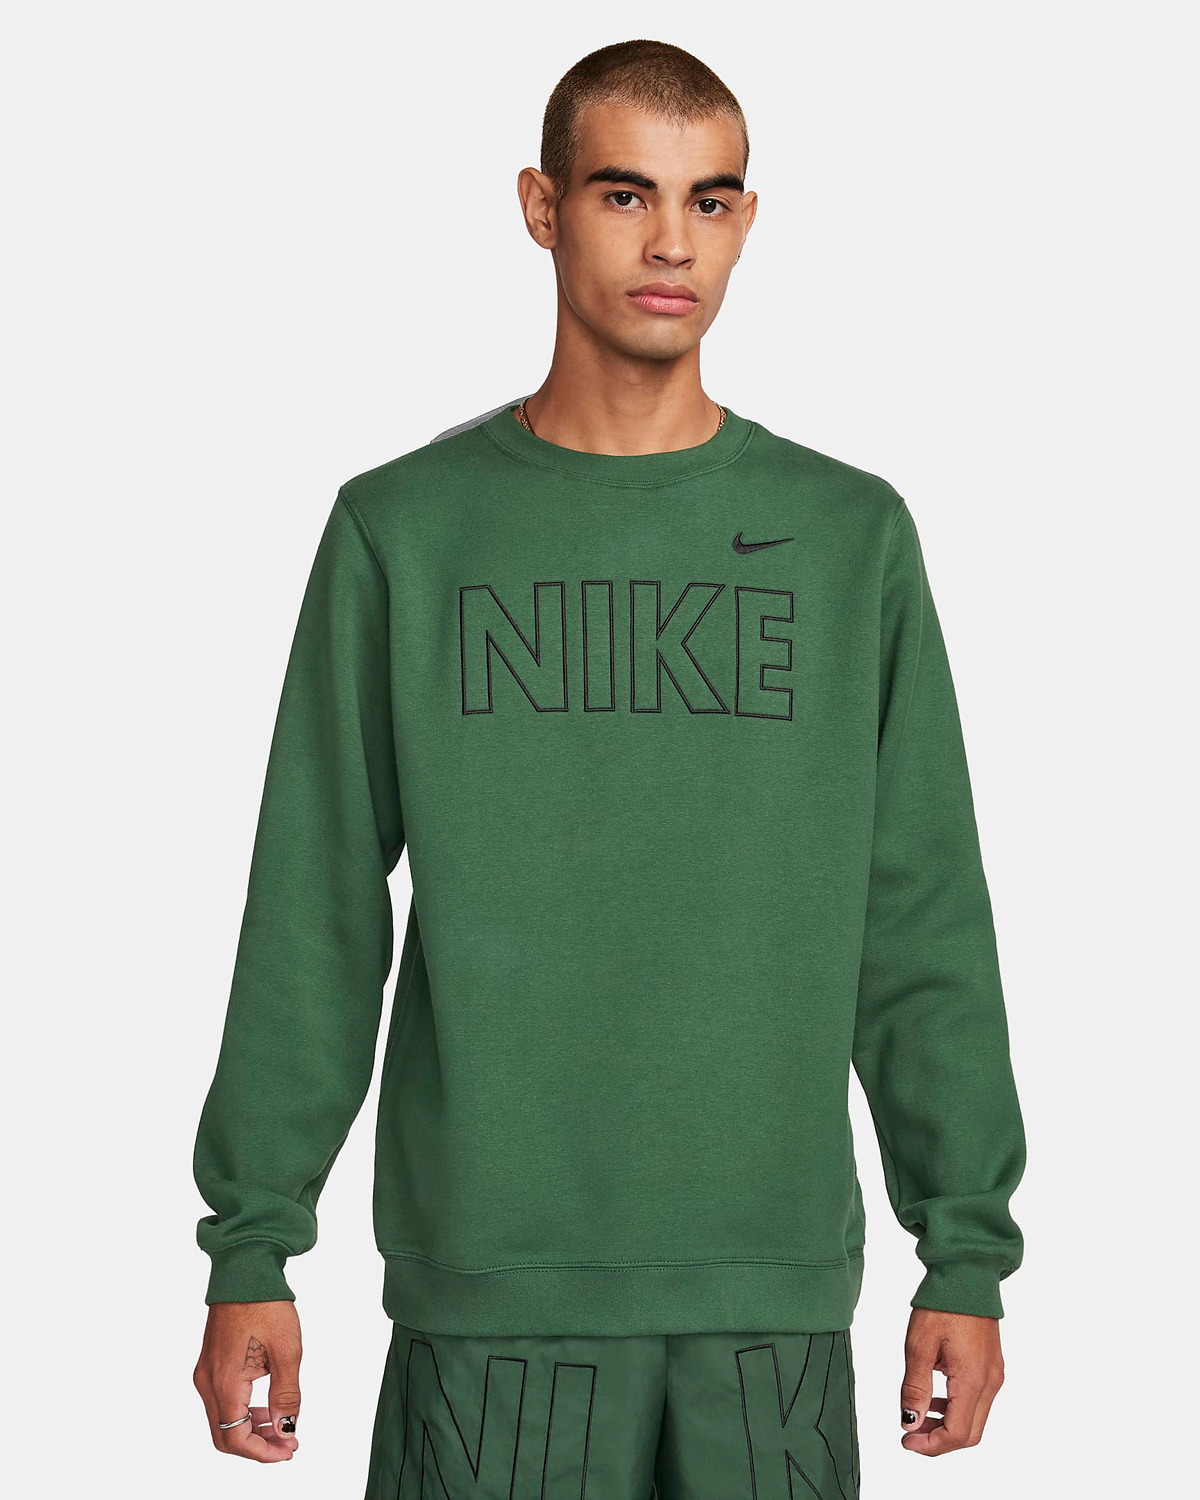 Nike Fir Green Shirts Hoodies Pants Clothing Sneaker Outfits